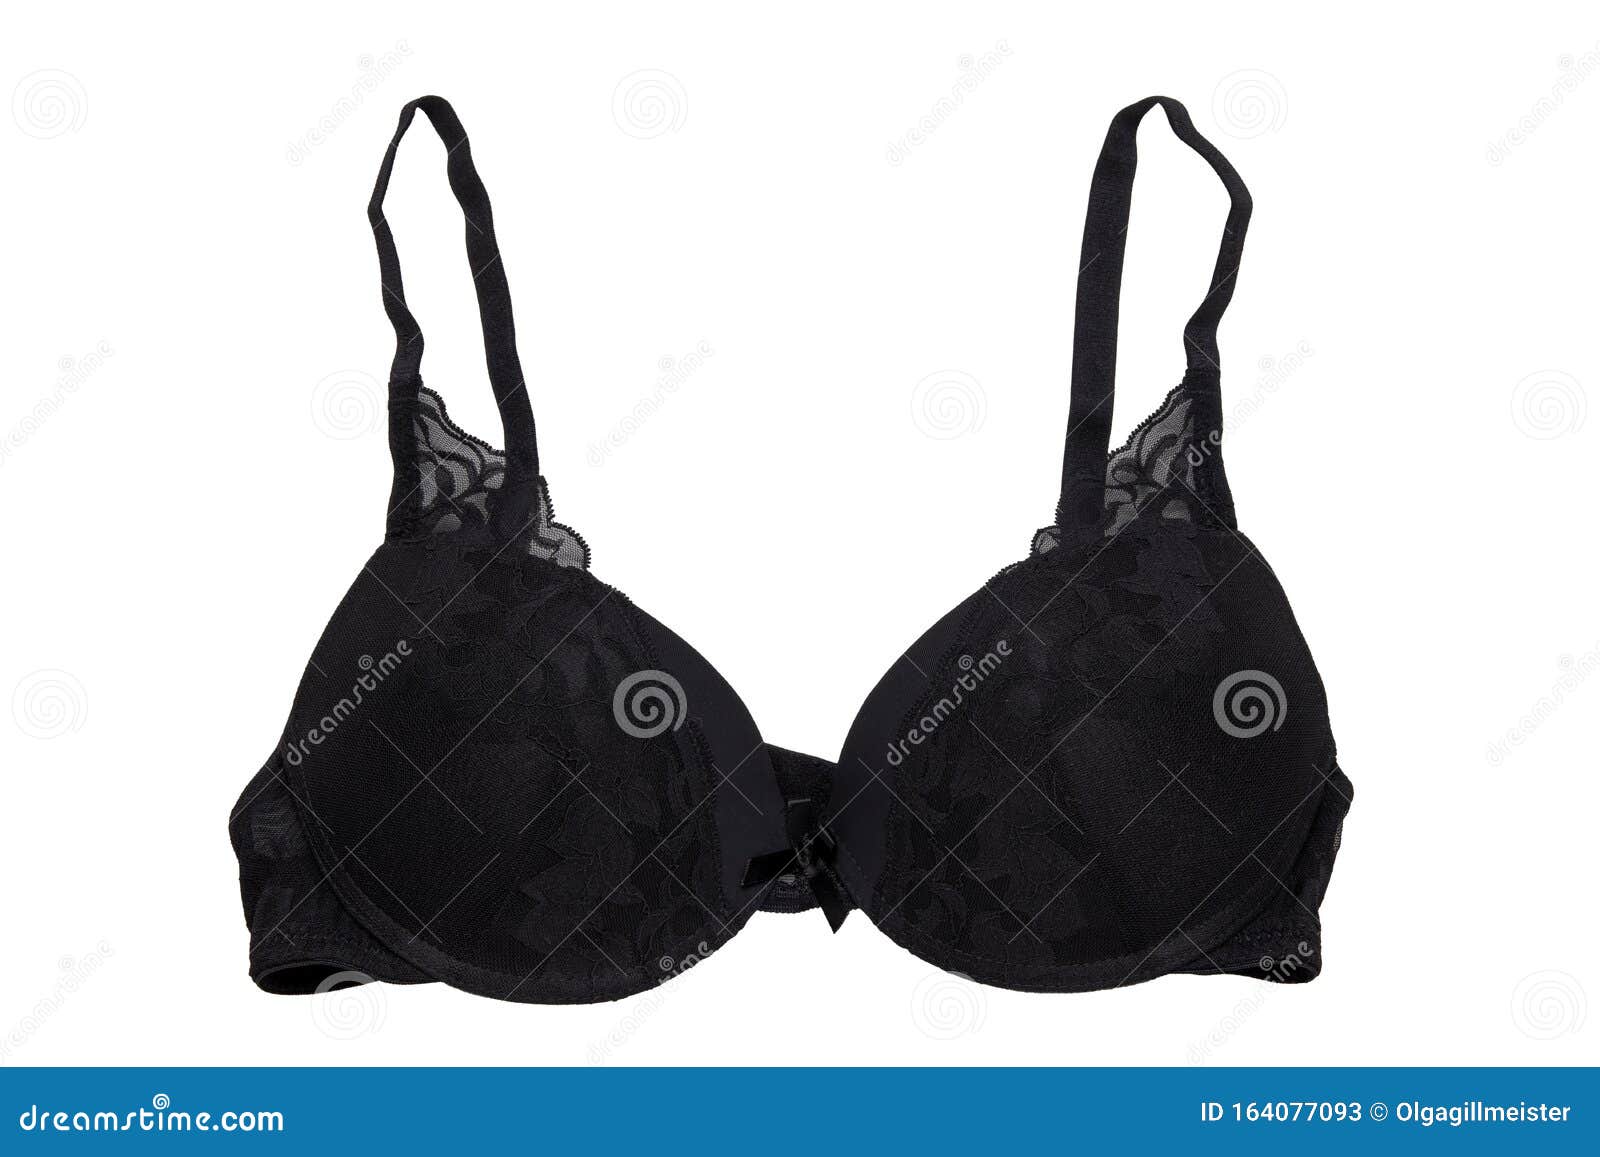 https://thumbs.dreamstime.com/z/bra-isolated-closeup-beautiful-female-stylish-black-laces-straps-white-background-fashionable-women-underwear-164077093.jpg